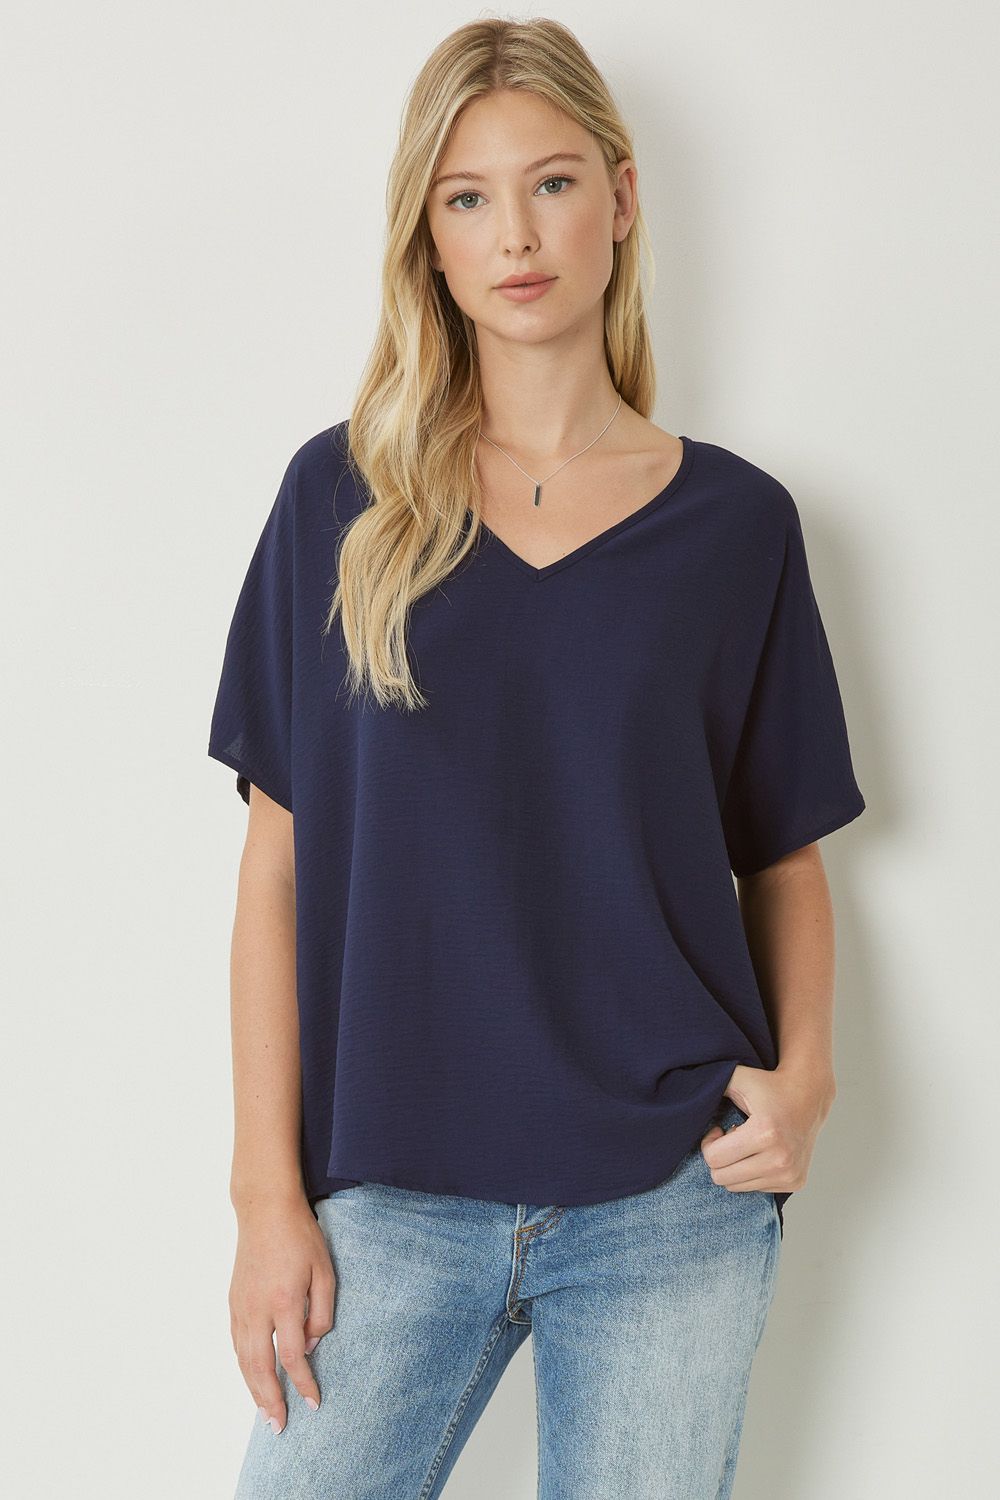 Women's navy blue basic v-neck shirt.